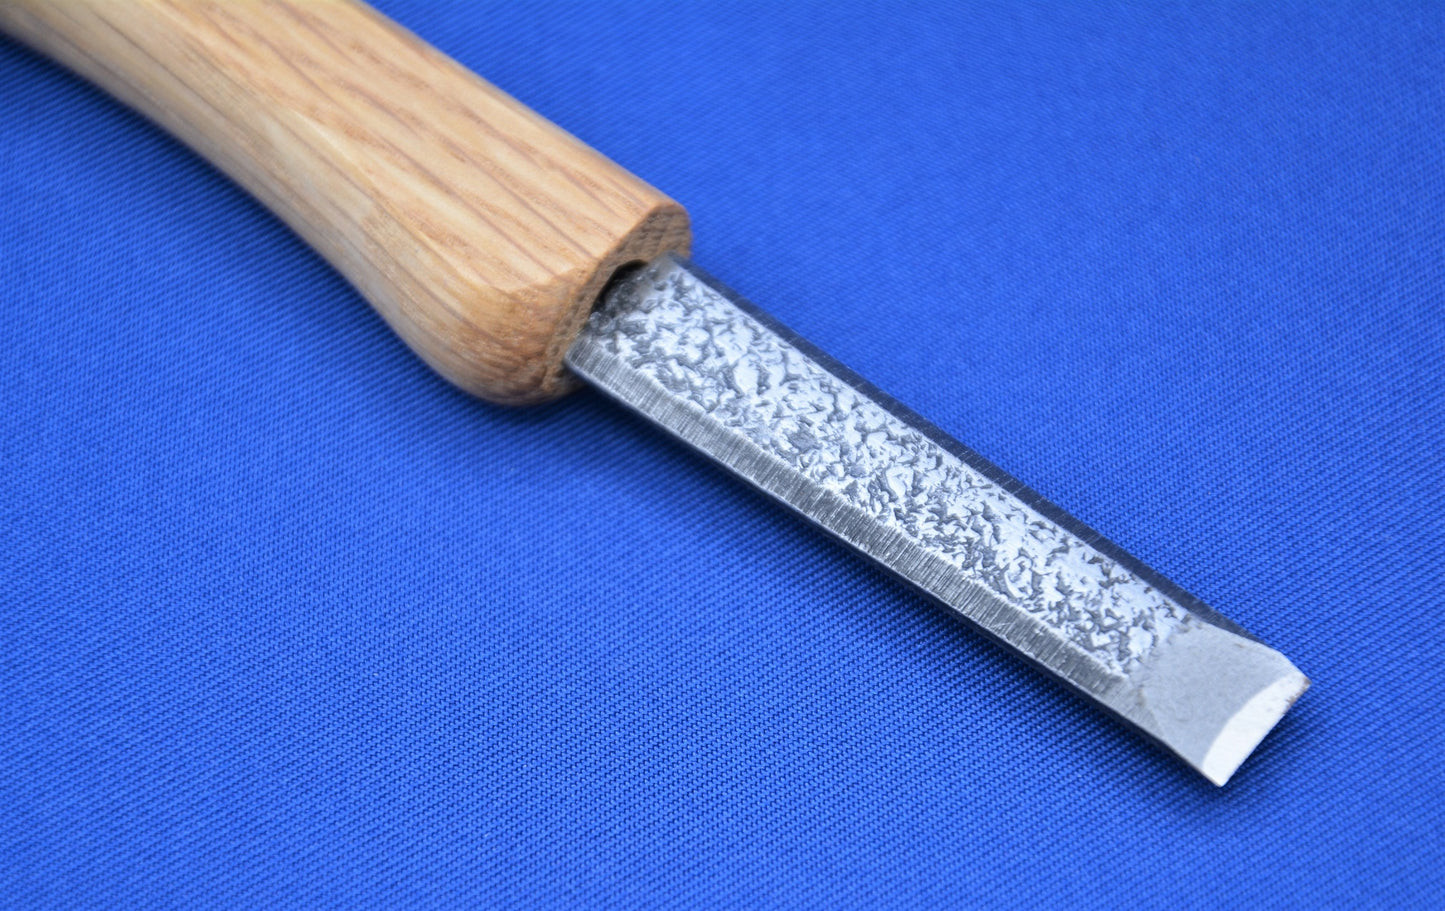 Wood Carving Knife - Flat